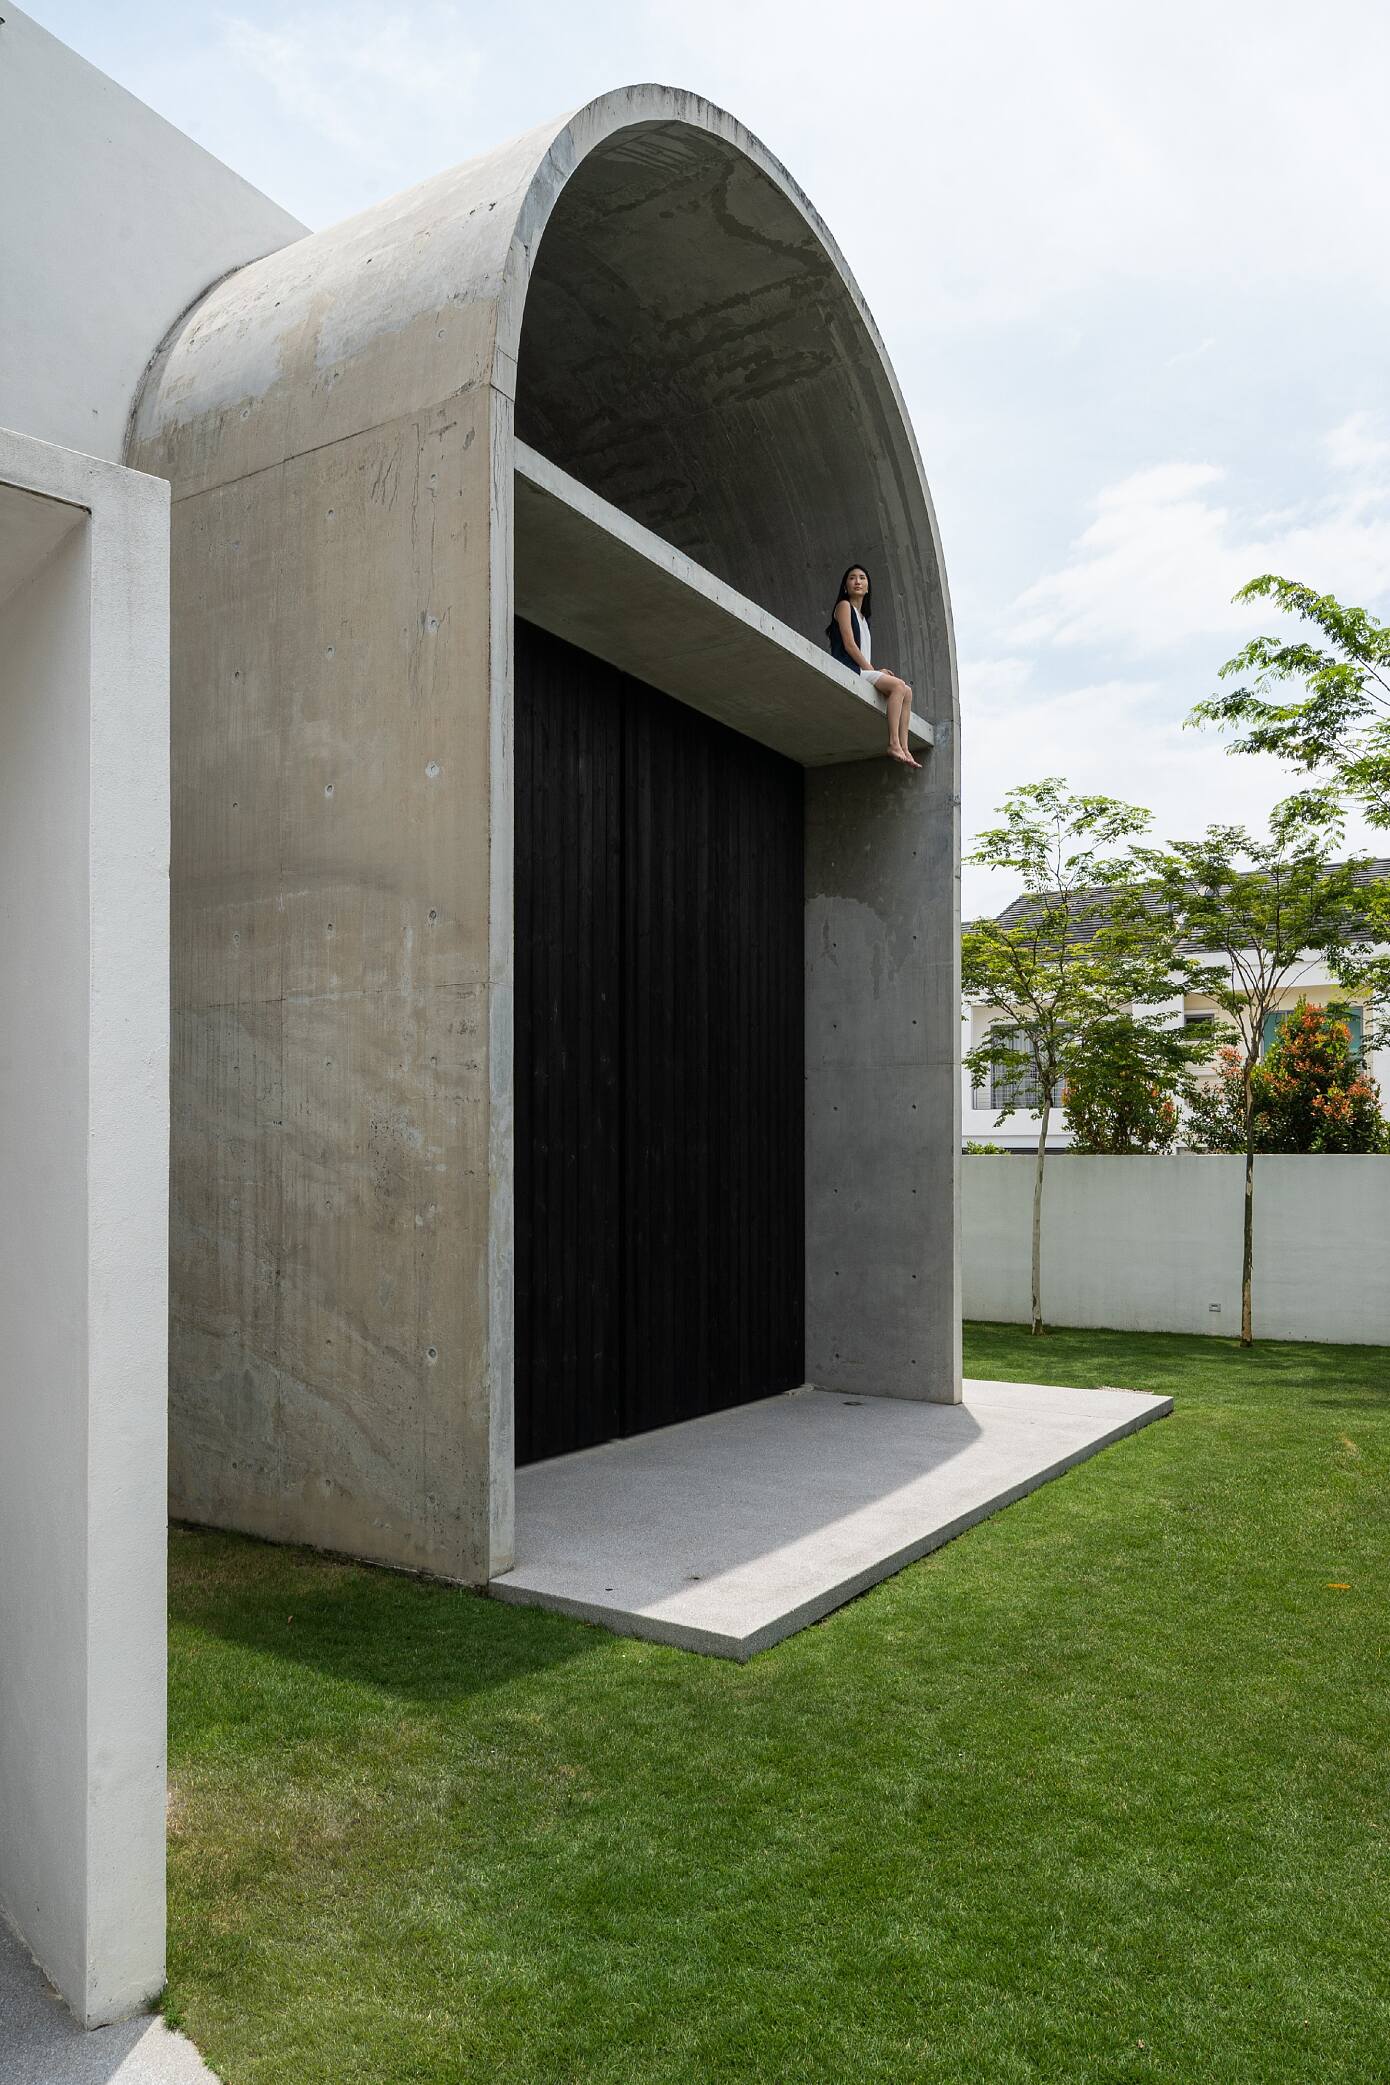 Bewboc House by Fabian Tan Architects